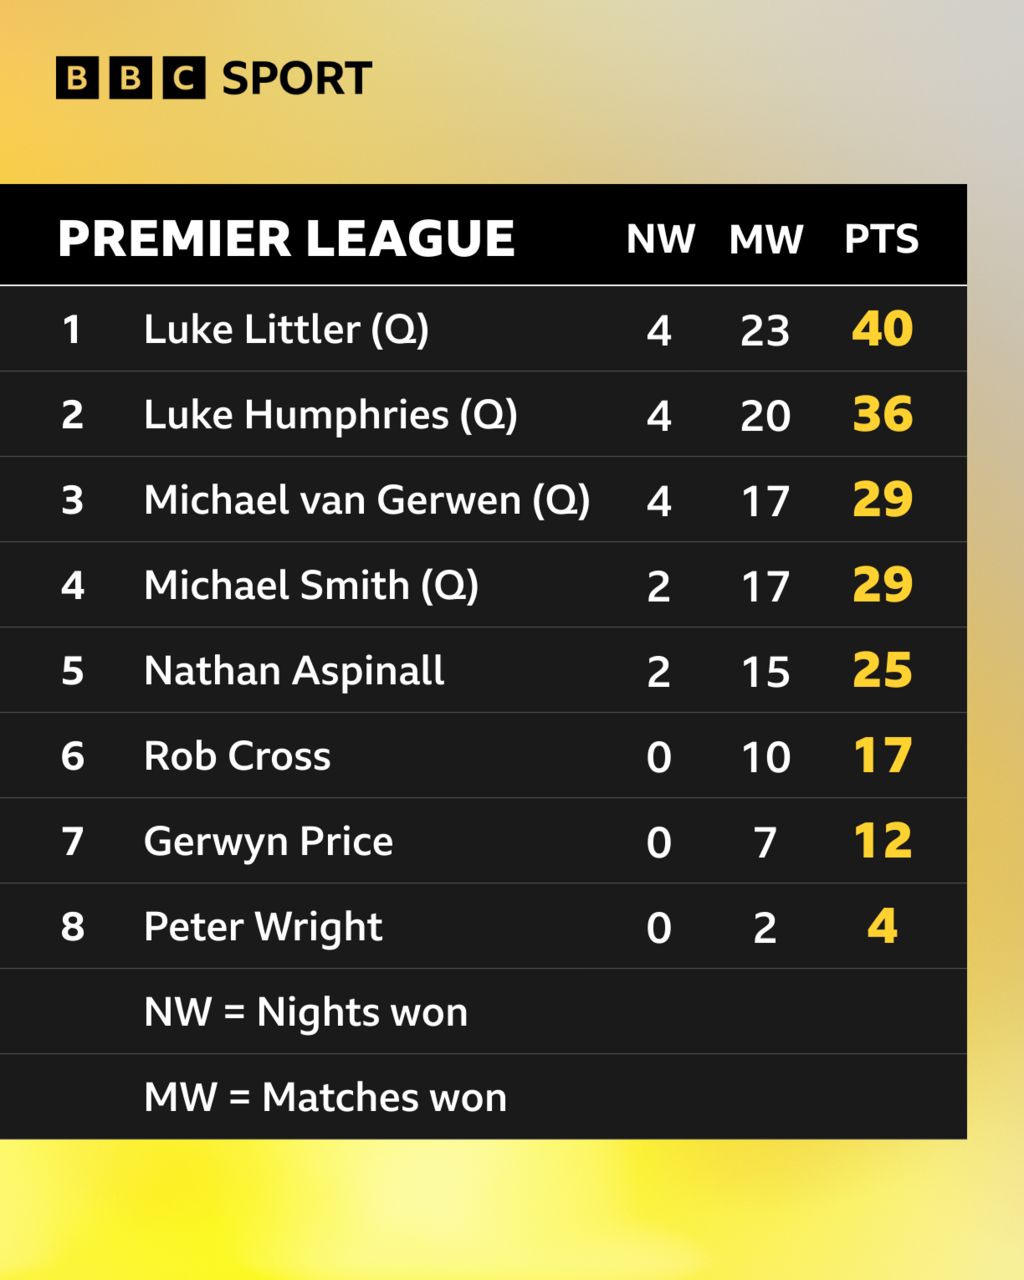 Premier League Darts table: Luke Littler 40, Luke Humphries 36, Michael van Gerwen 29, Michael 29, Nathan Aspinall 25, Rob Cross 17, Gerwyn Price 12, Peter Wright 4